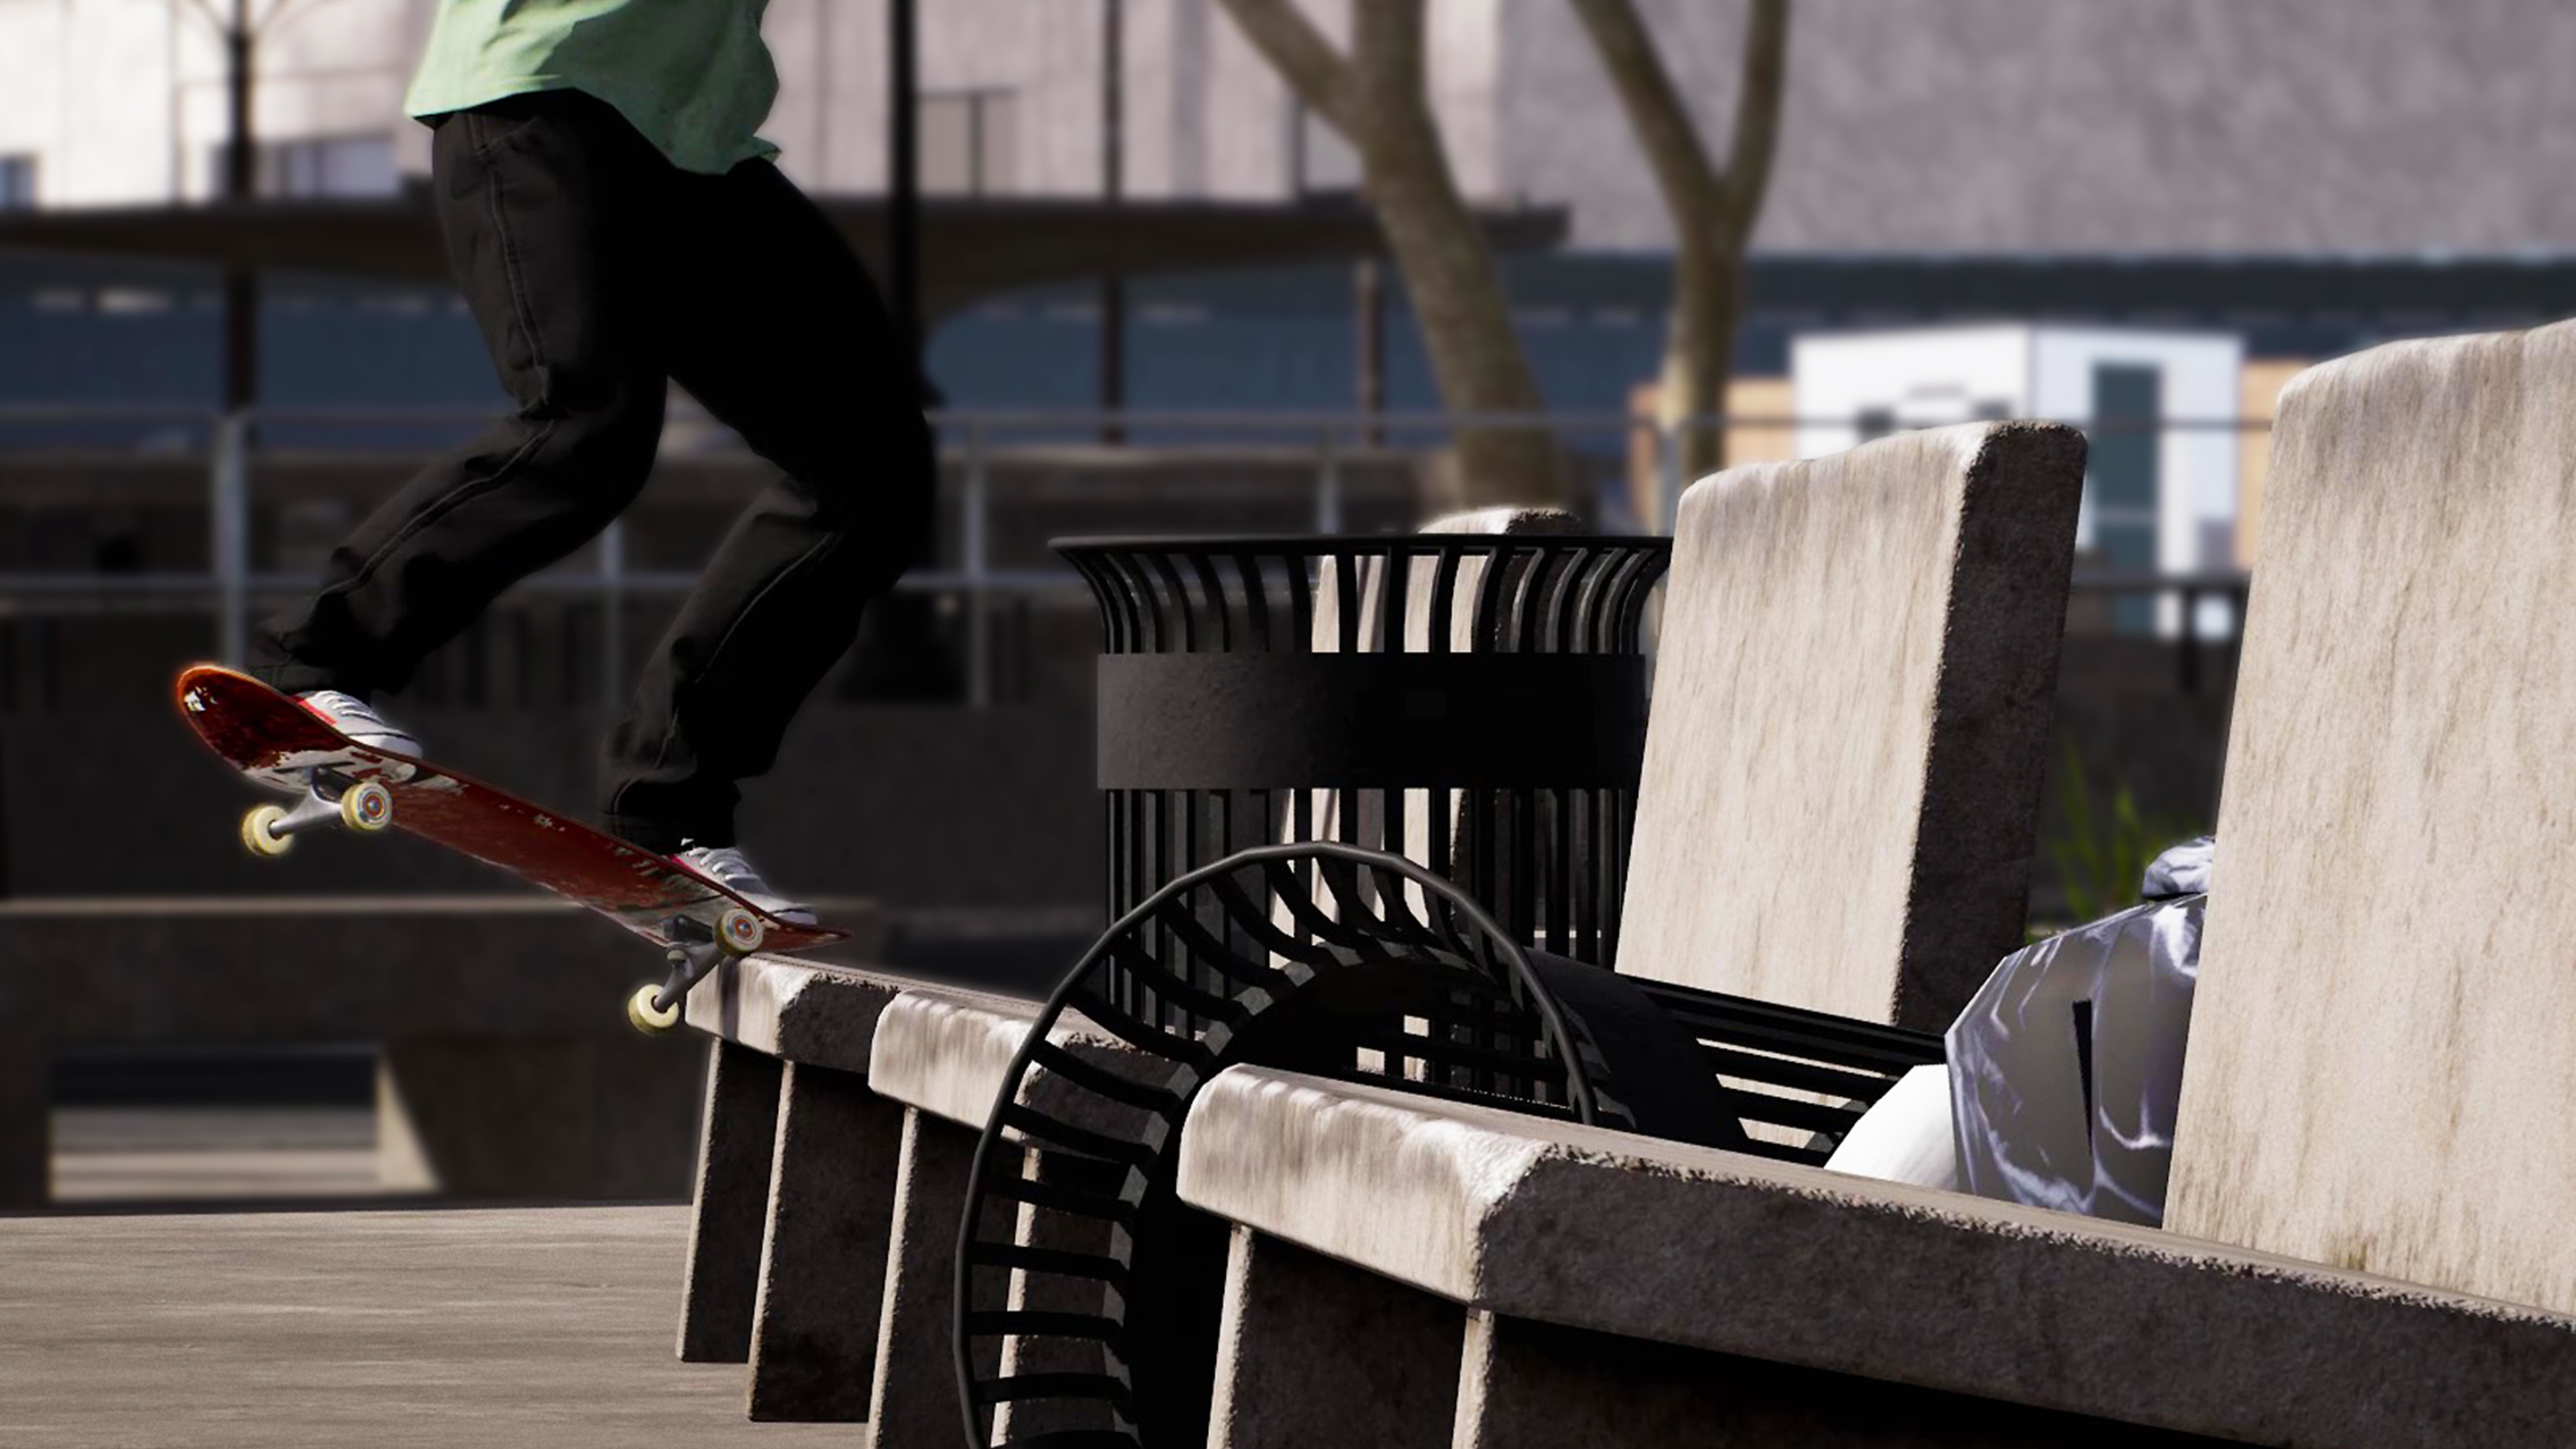 《Session:Skate Sim》螢幕截圖，顯示一名滑板玩家在輾磨長椅